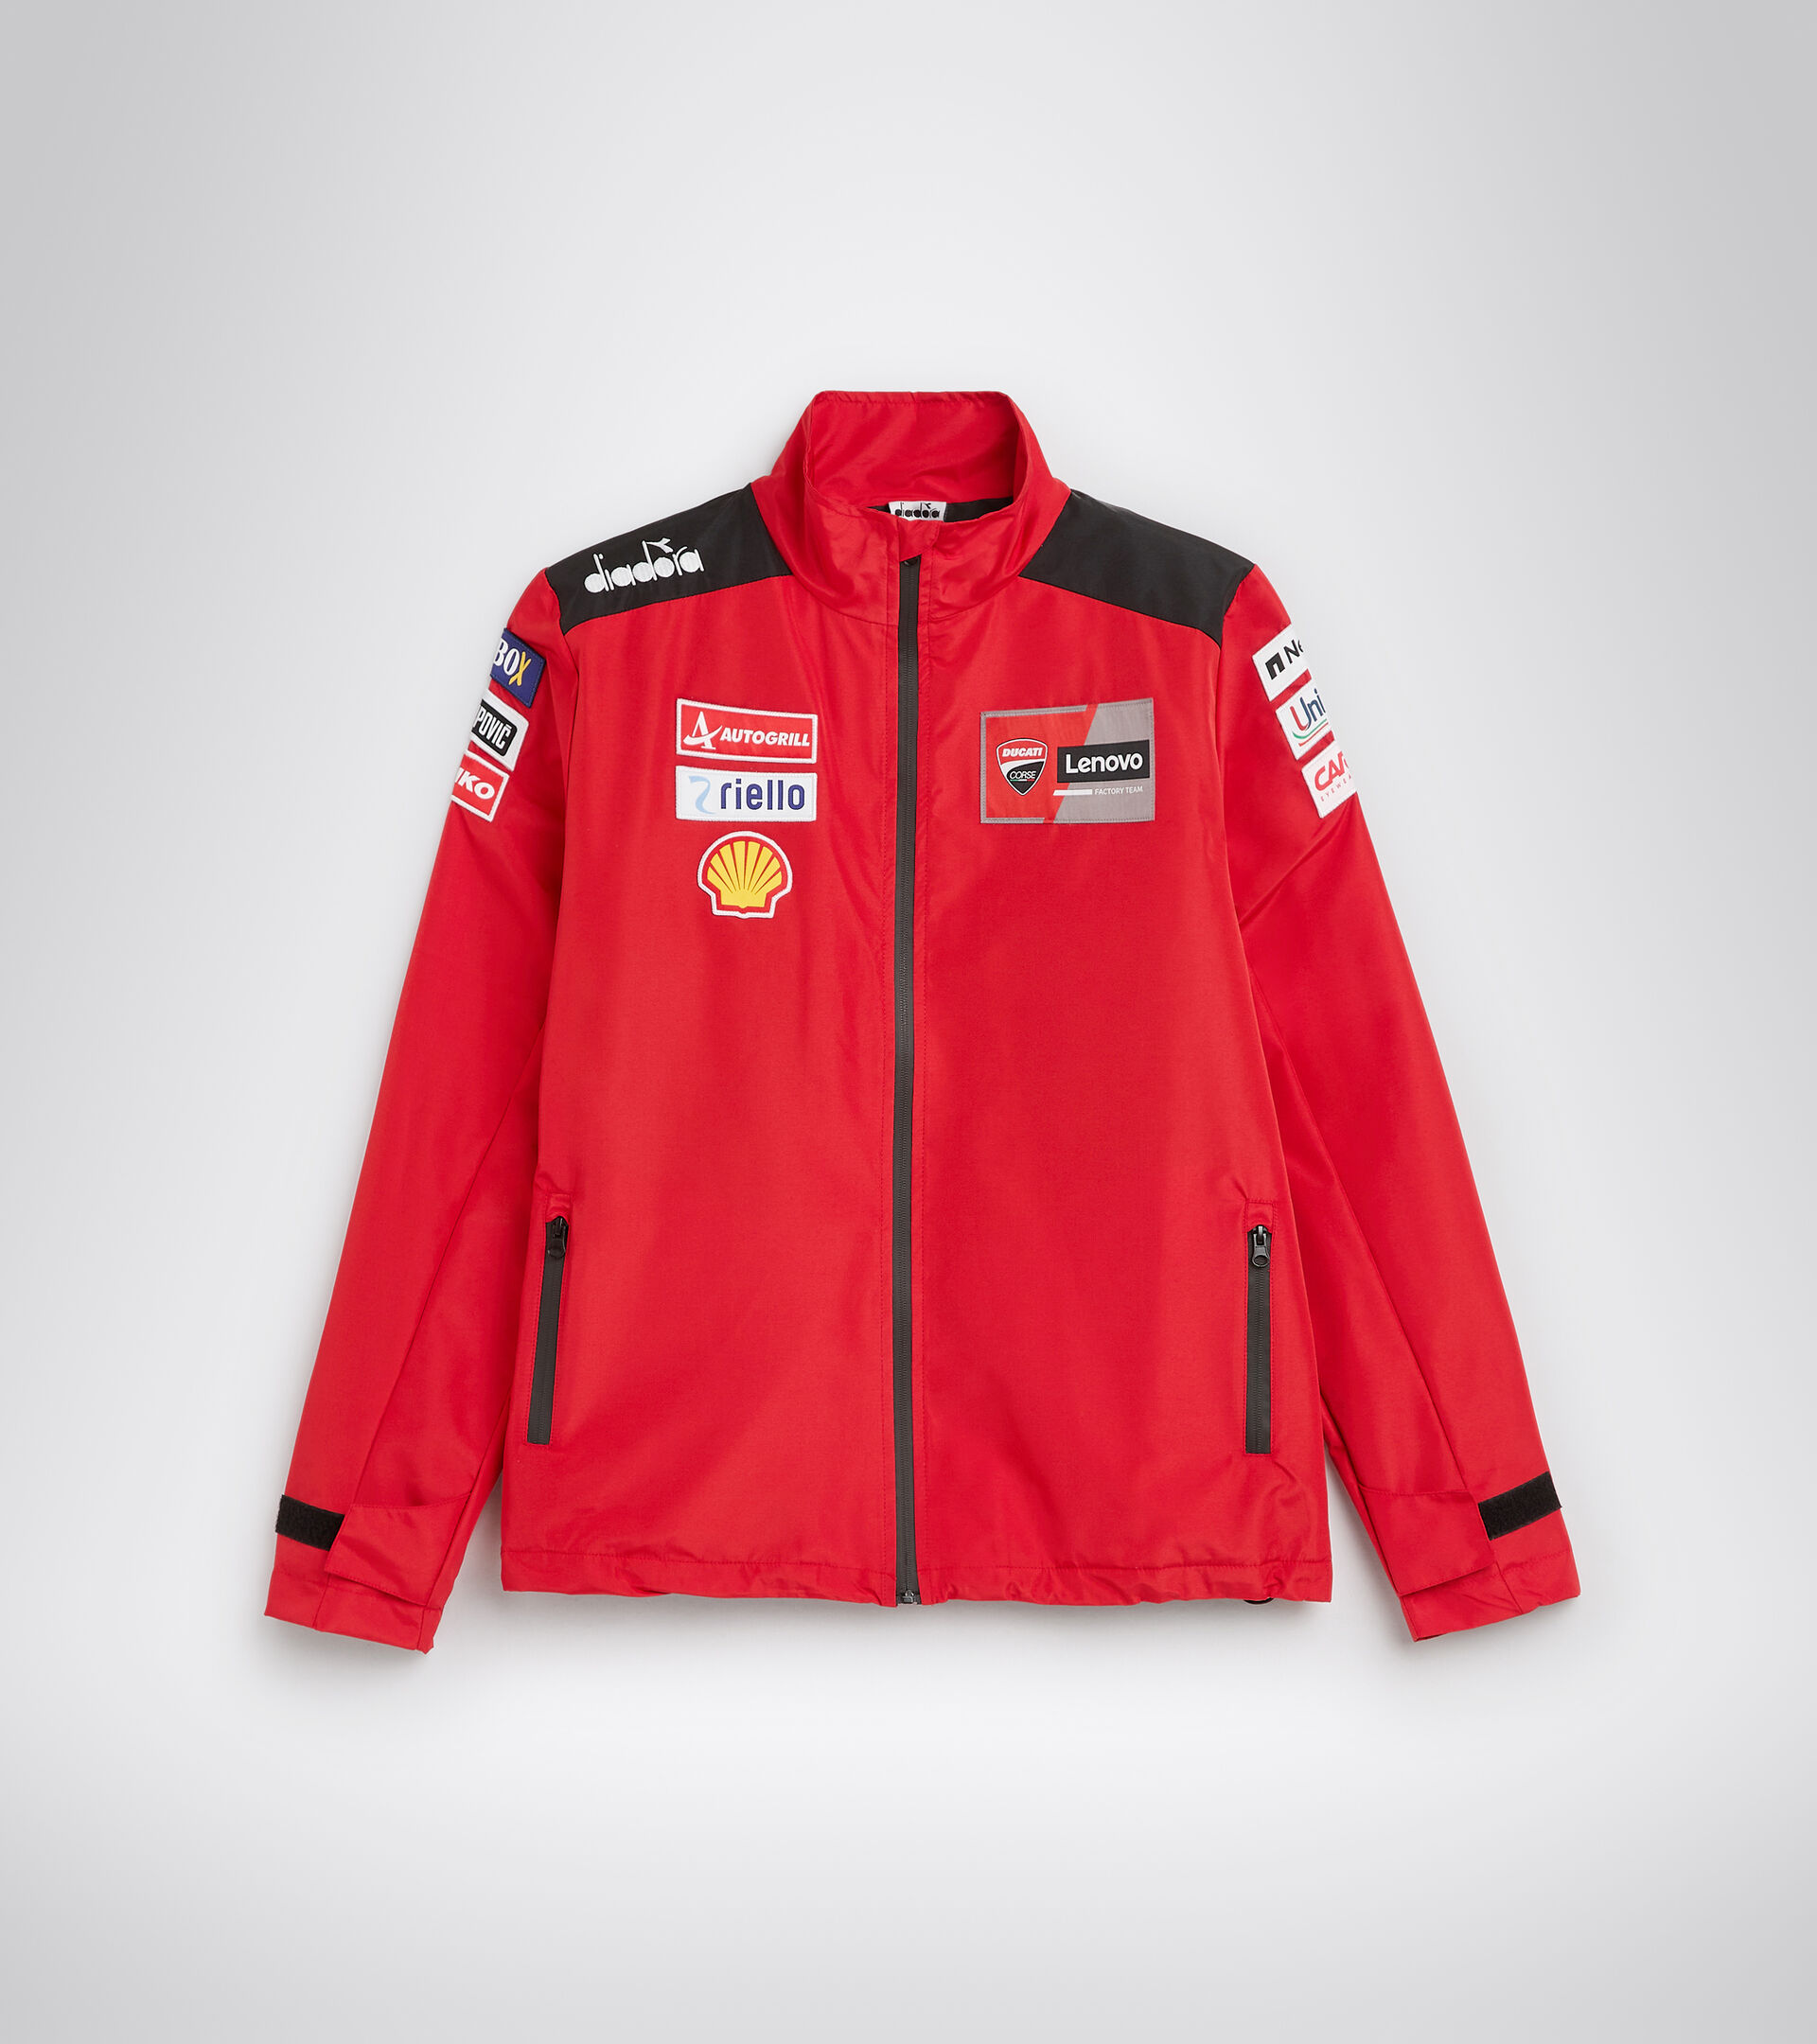 Ducati 22 MotoGP replica sports jacket - Men's
 JACKET DUCATI REPLICA MGP22 DUCATI MGP RED/BLACK - Diadora